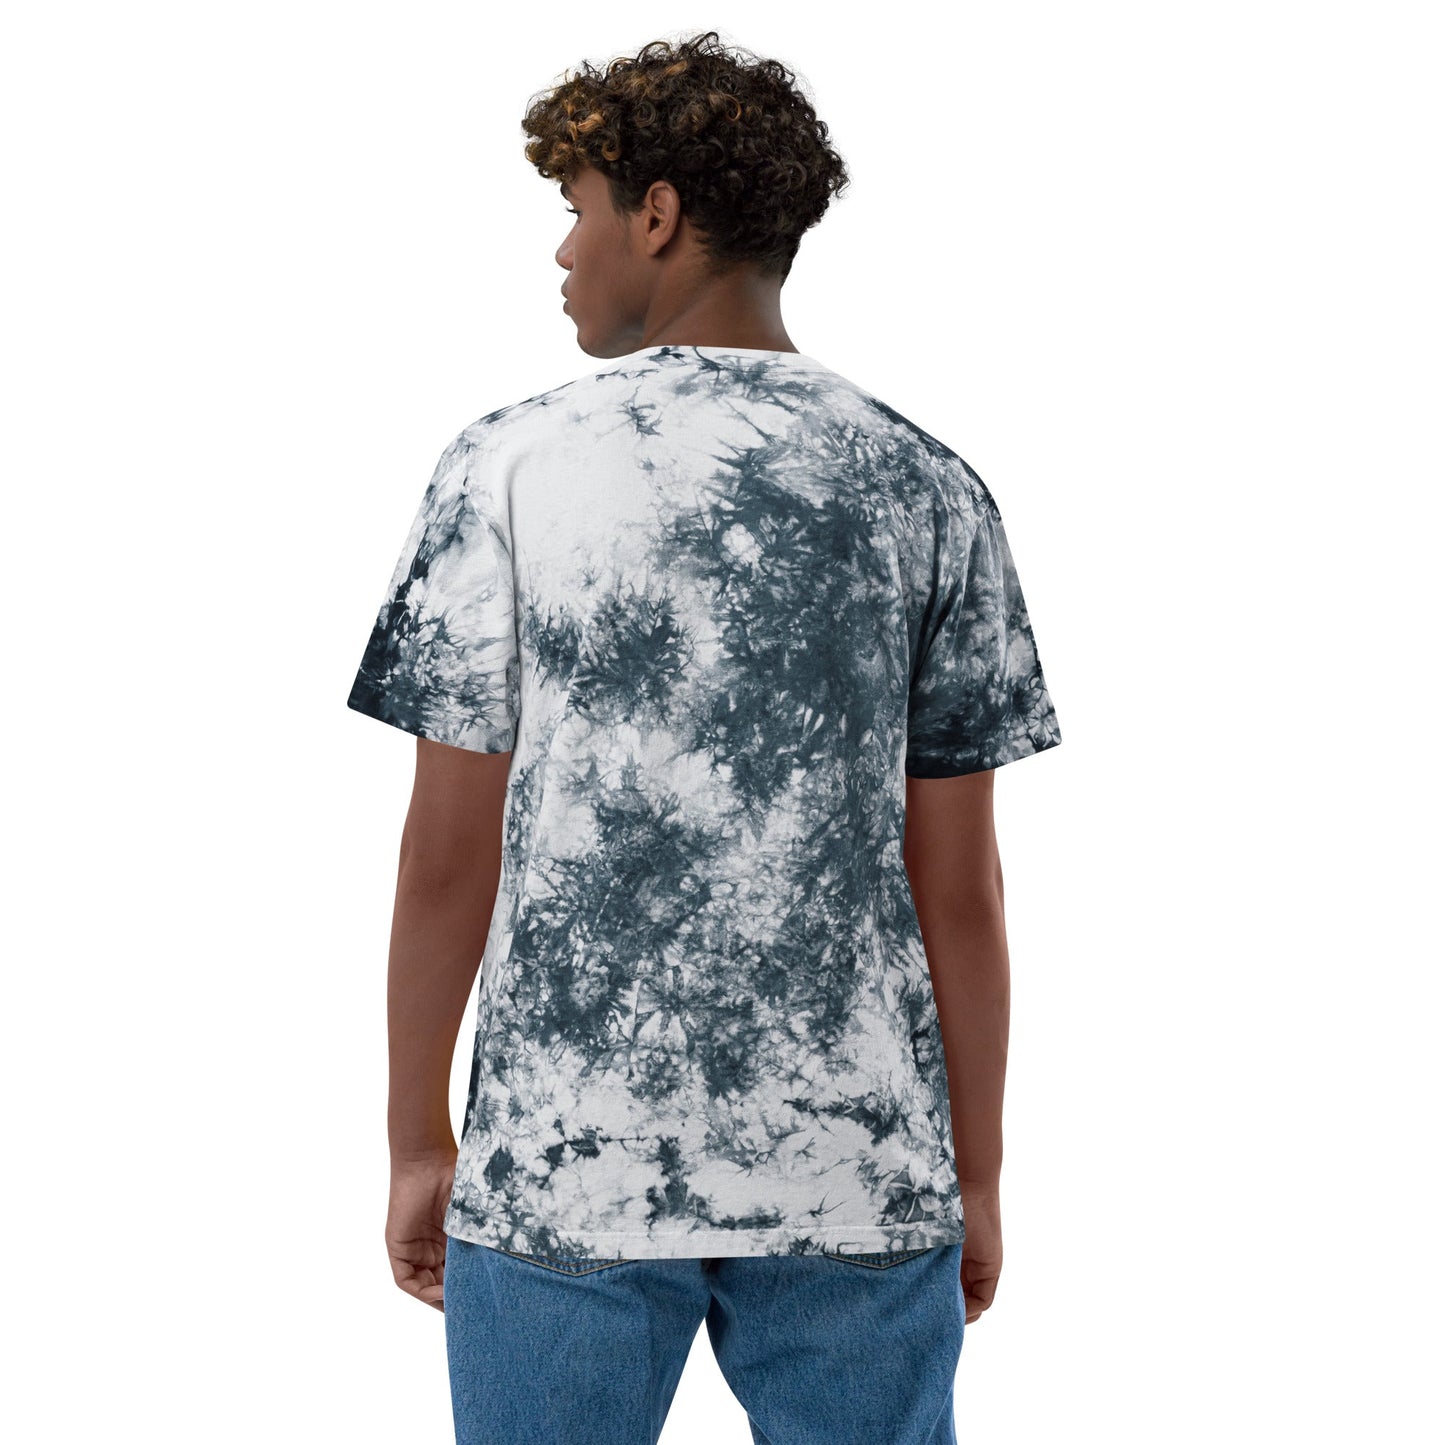 Farris Wheel Oversized Unisex Tie-dye T-shirt - BeExtra! Apparel & More